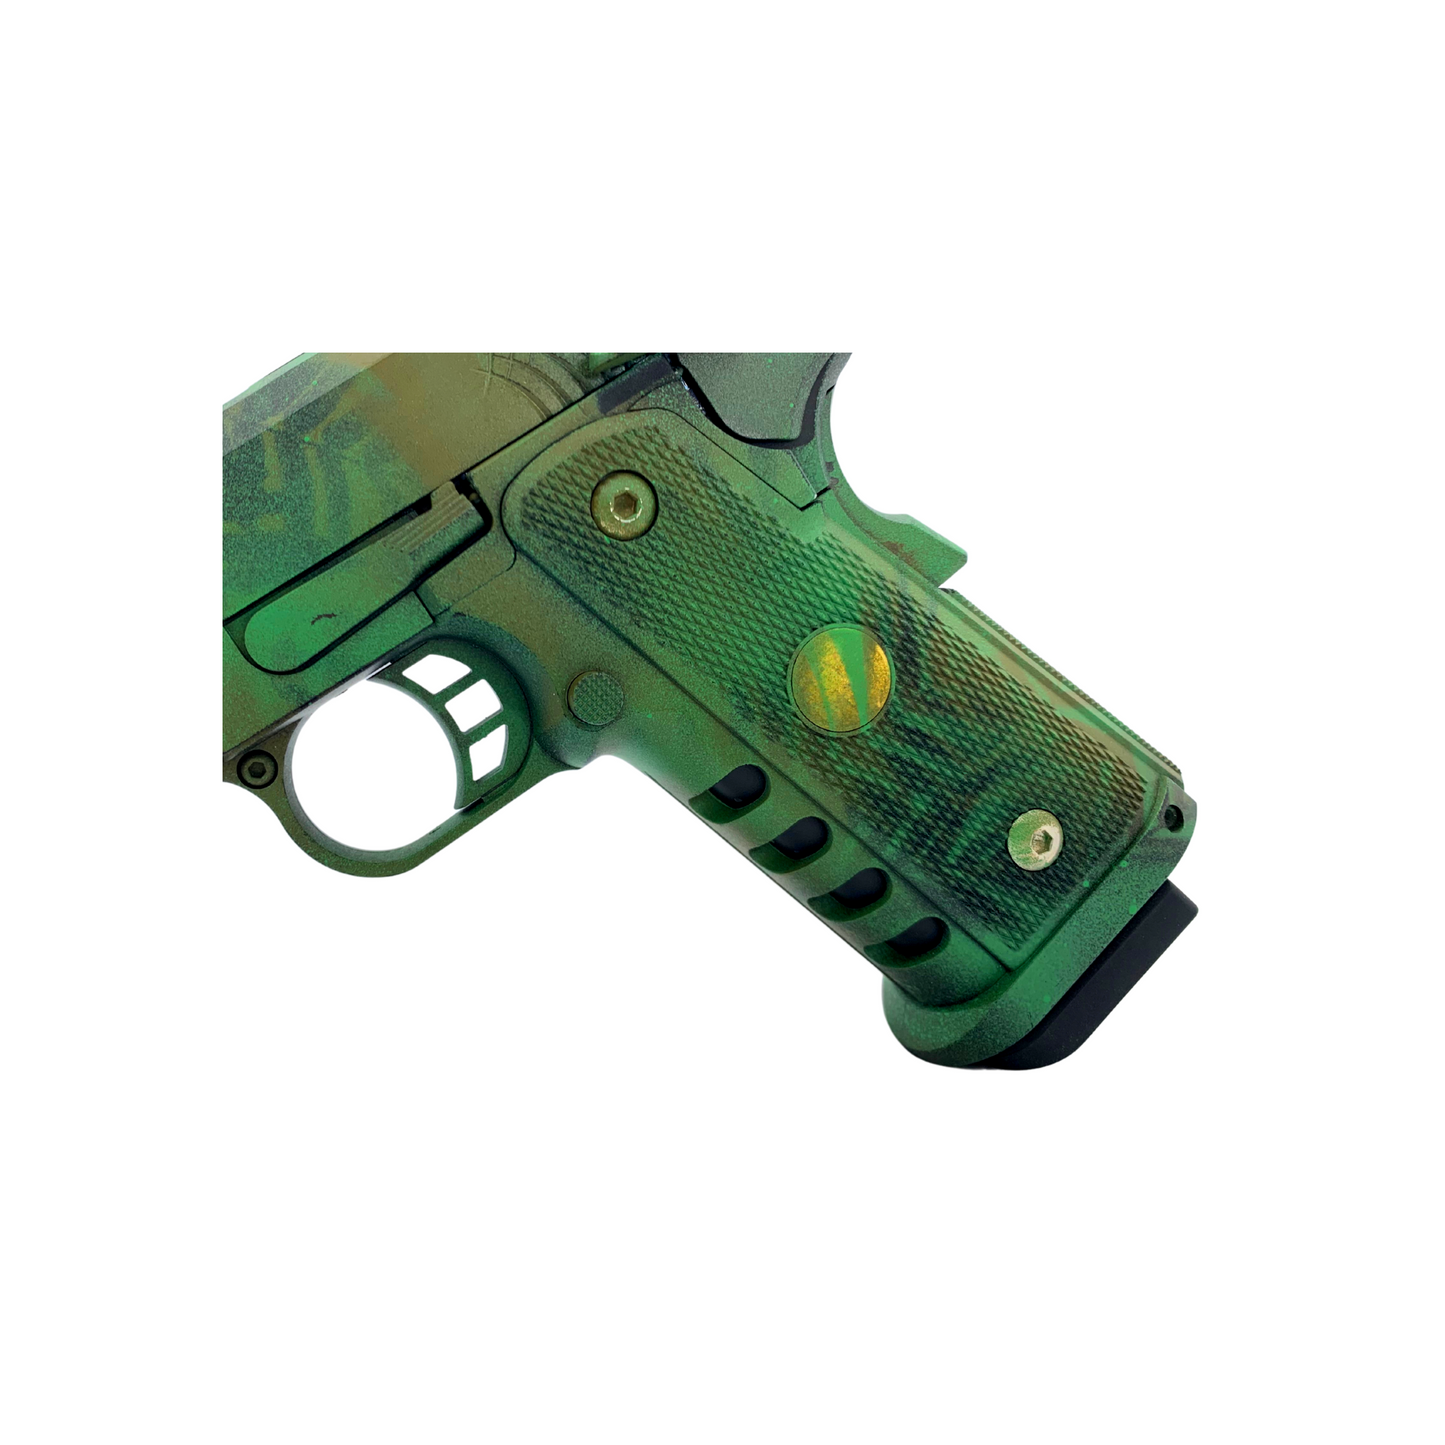 WETECH 5.1 "Camo" Gas Pistol - Gel Blaster